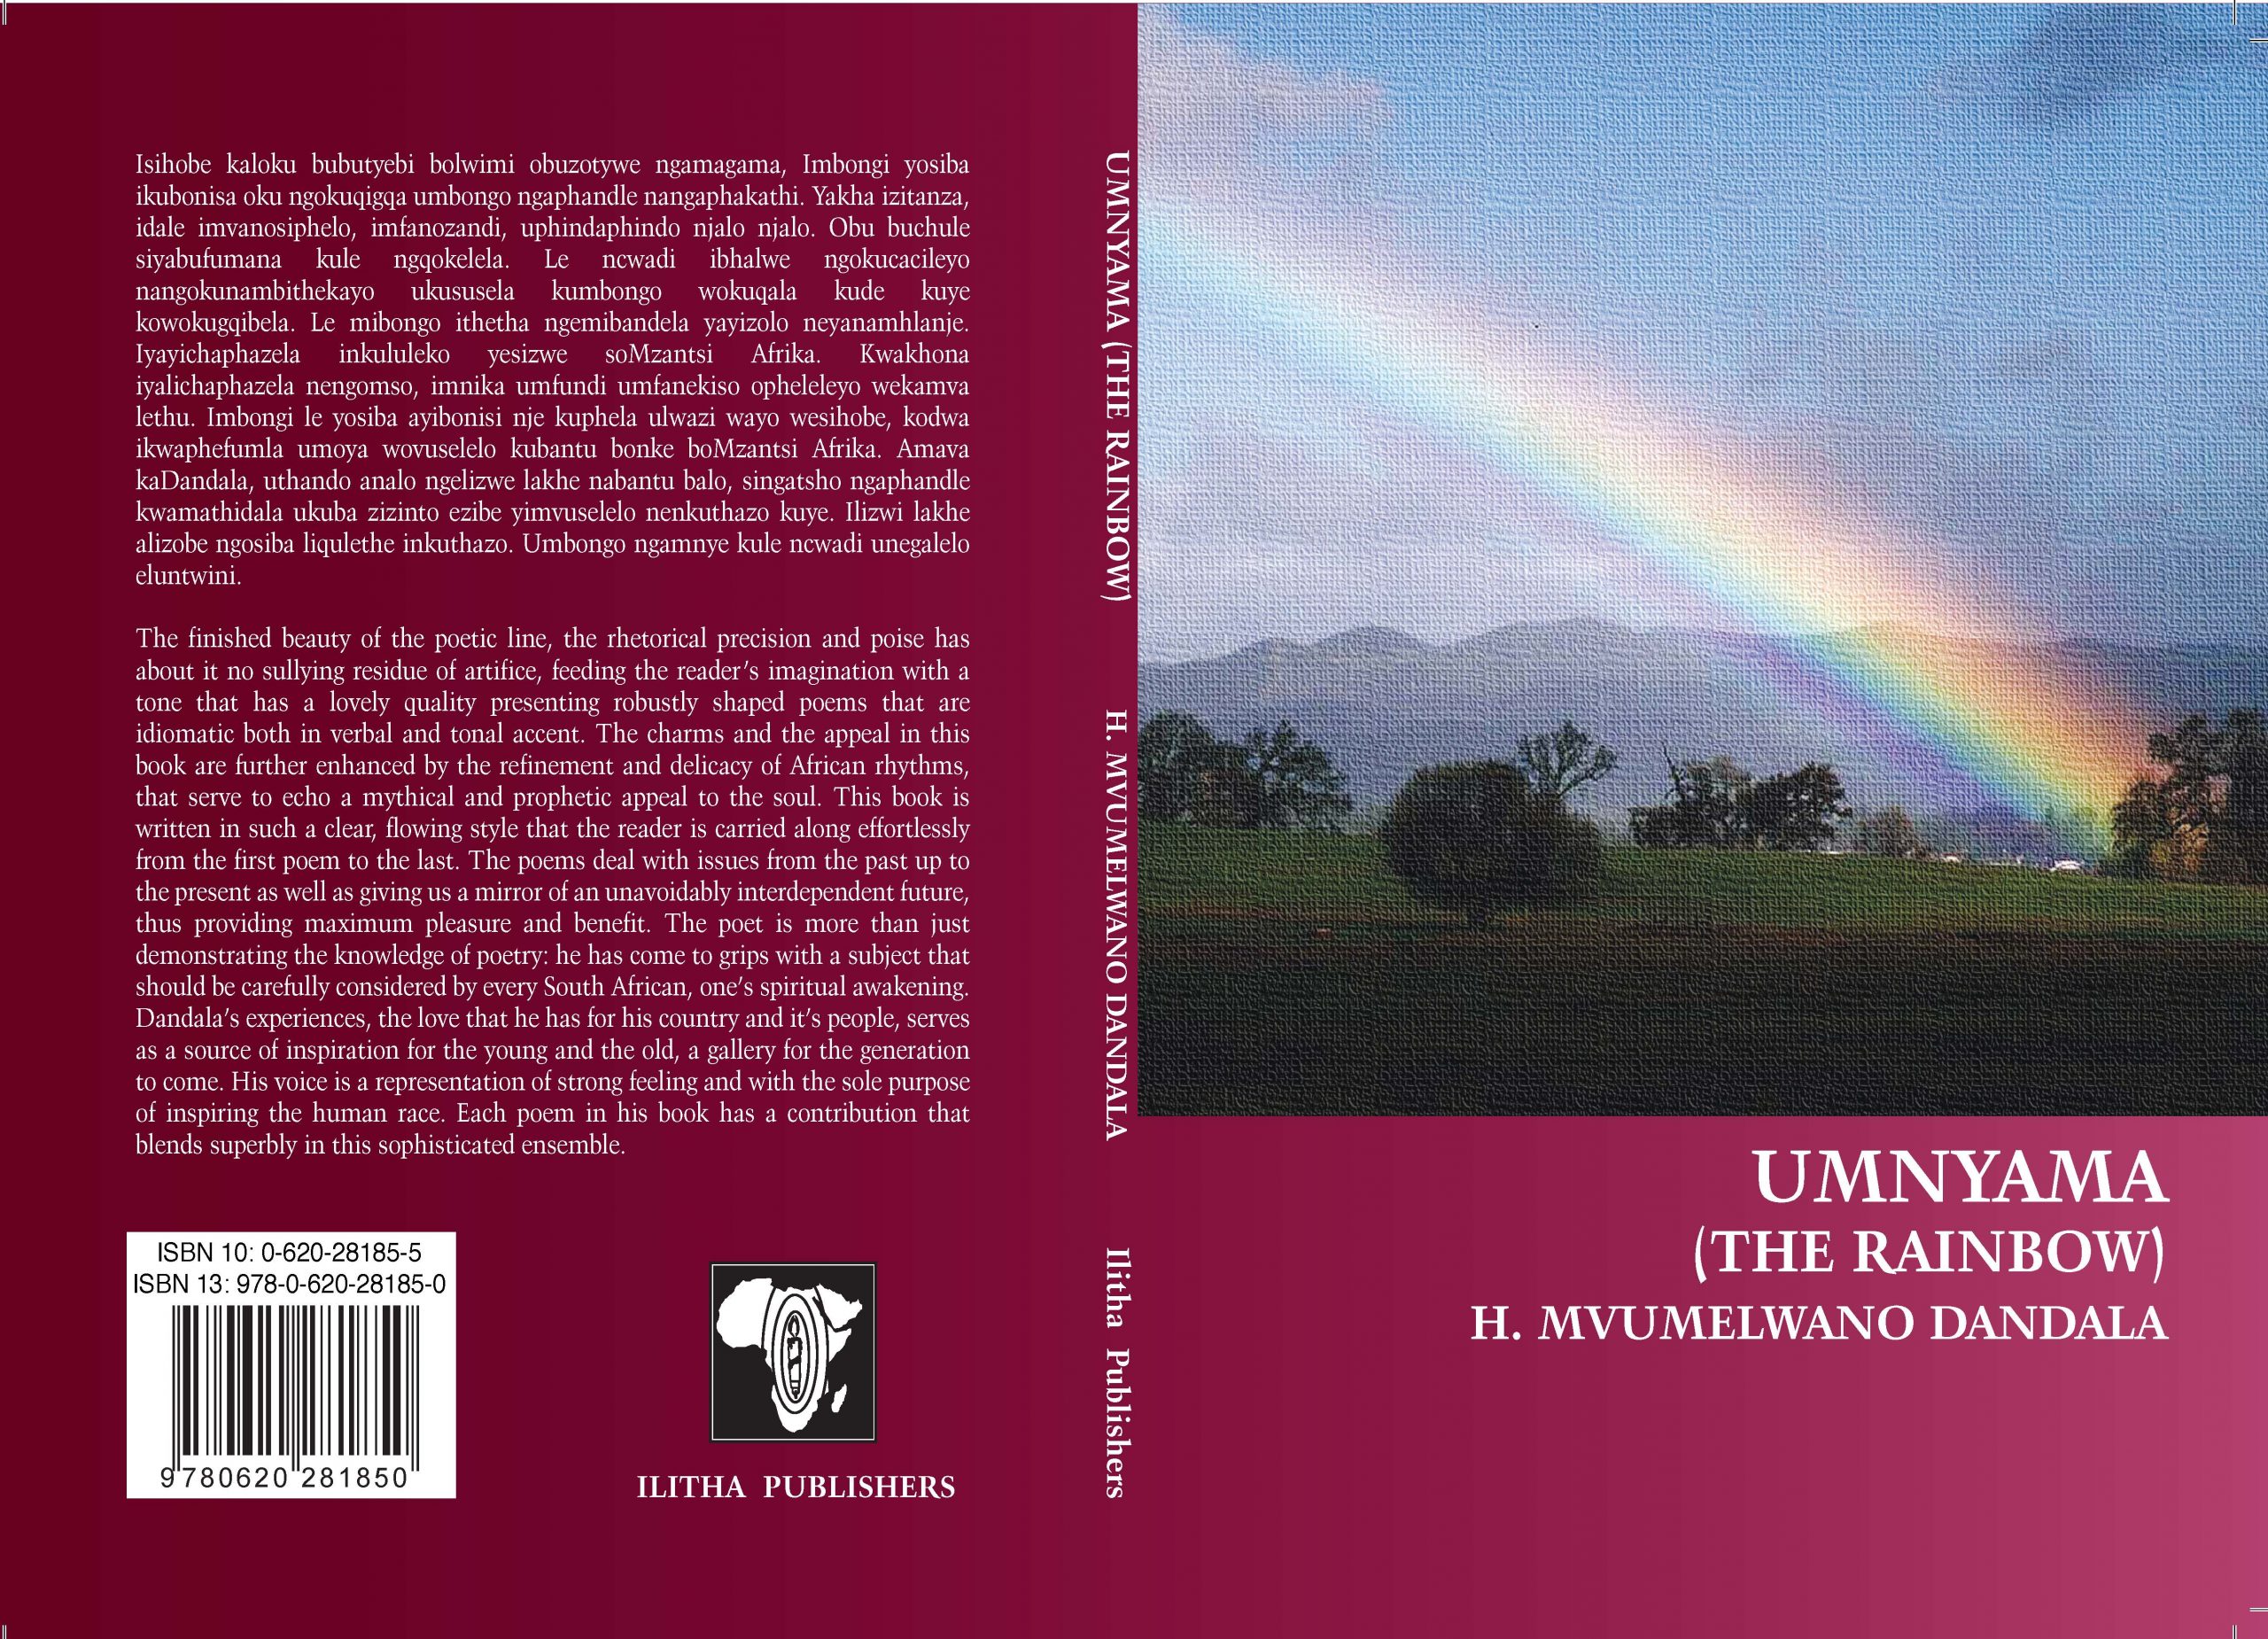 34-UMNYAMA GR11 (THE RAINBOW)